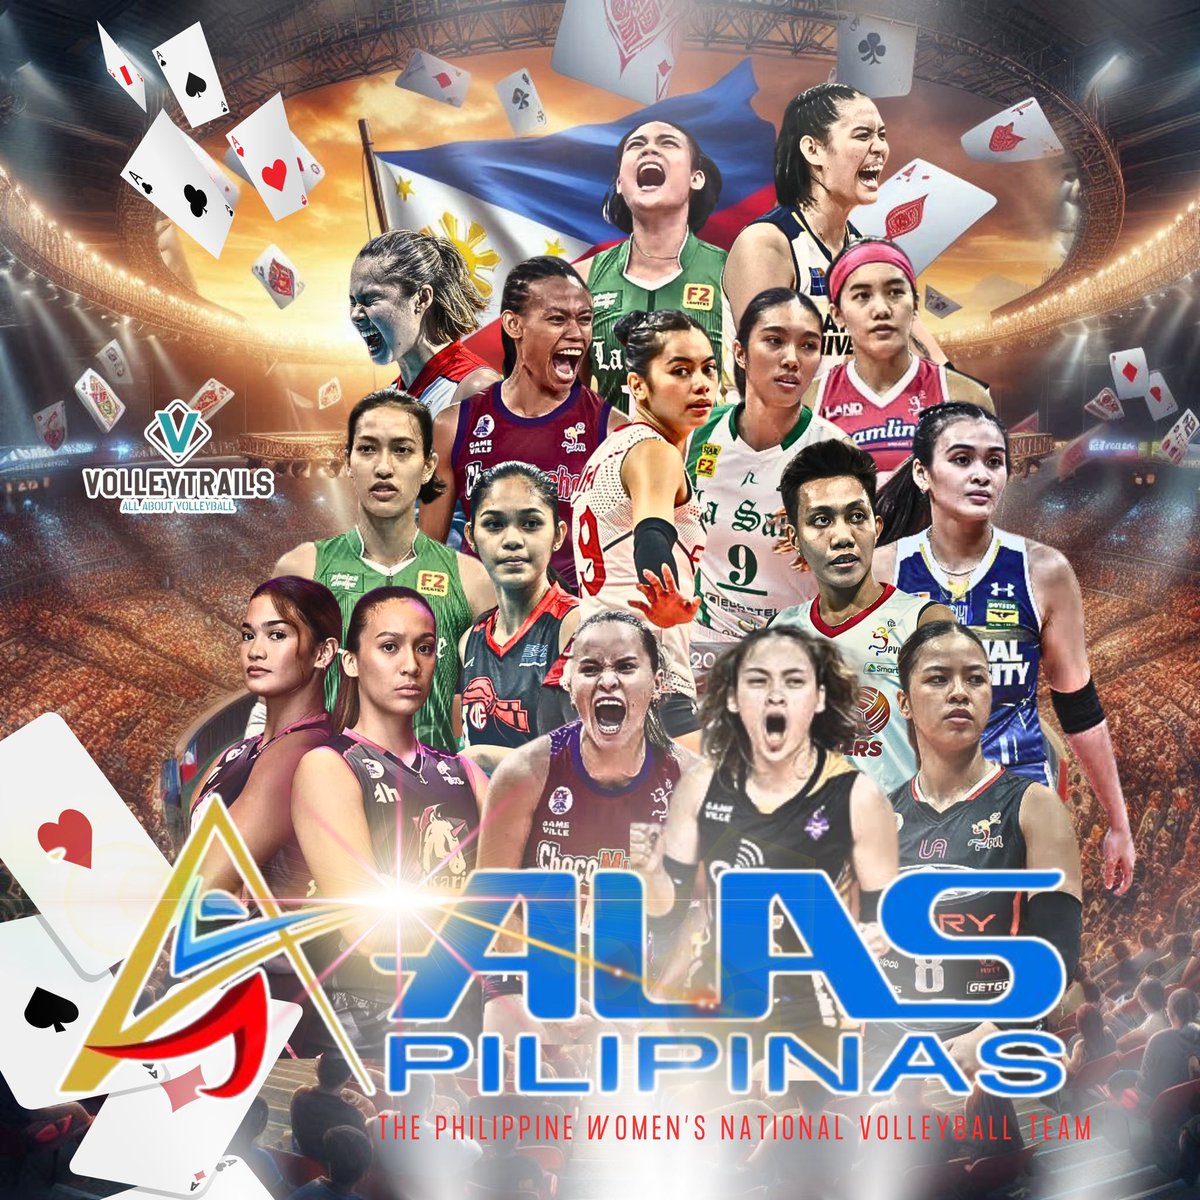 𝐀𝐋𝐀𝐒 𝐏𝐈𝐋𝐈𝐏𝐈𝐍𝐀𝐒! 🇵🇭🏐

Introducing the ace-packed pool of the Alas Pilipinas women's national team for the upcoming 2024 AVC Challenge Cup! 🇵🇭 #LabanPilipinas

𝐒𝐞𝐭𝐭𝐞𝐫𝐬: De Guzman, Coronel
𝐌𝐁: Nunag, Palomata, Sharma, Gagate
𝐎𝐇: Rondina, Laure, Gandler,…